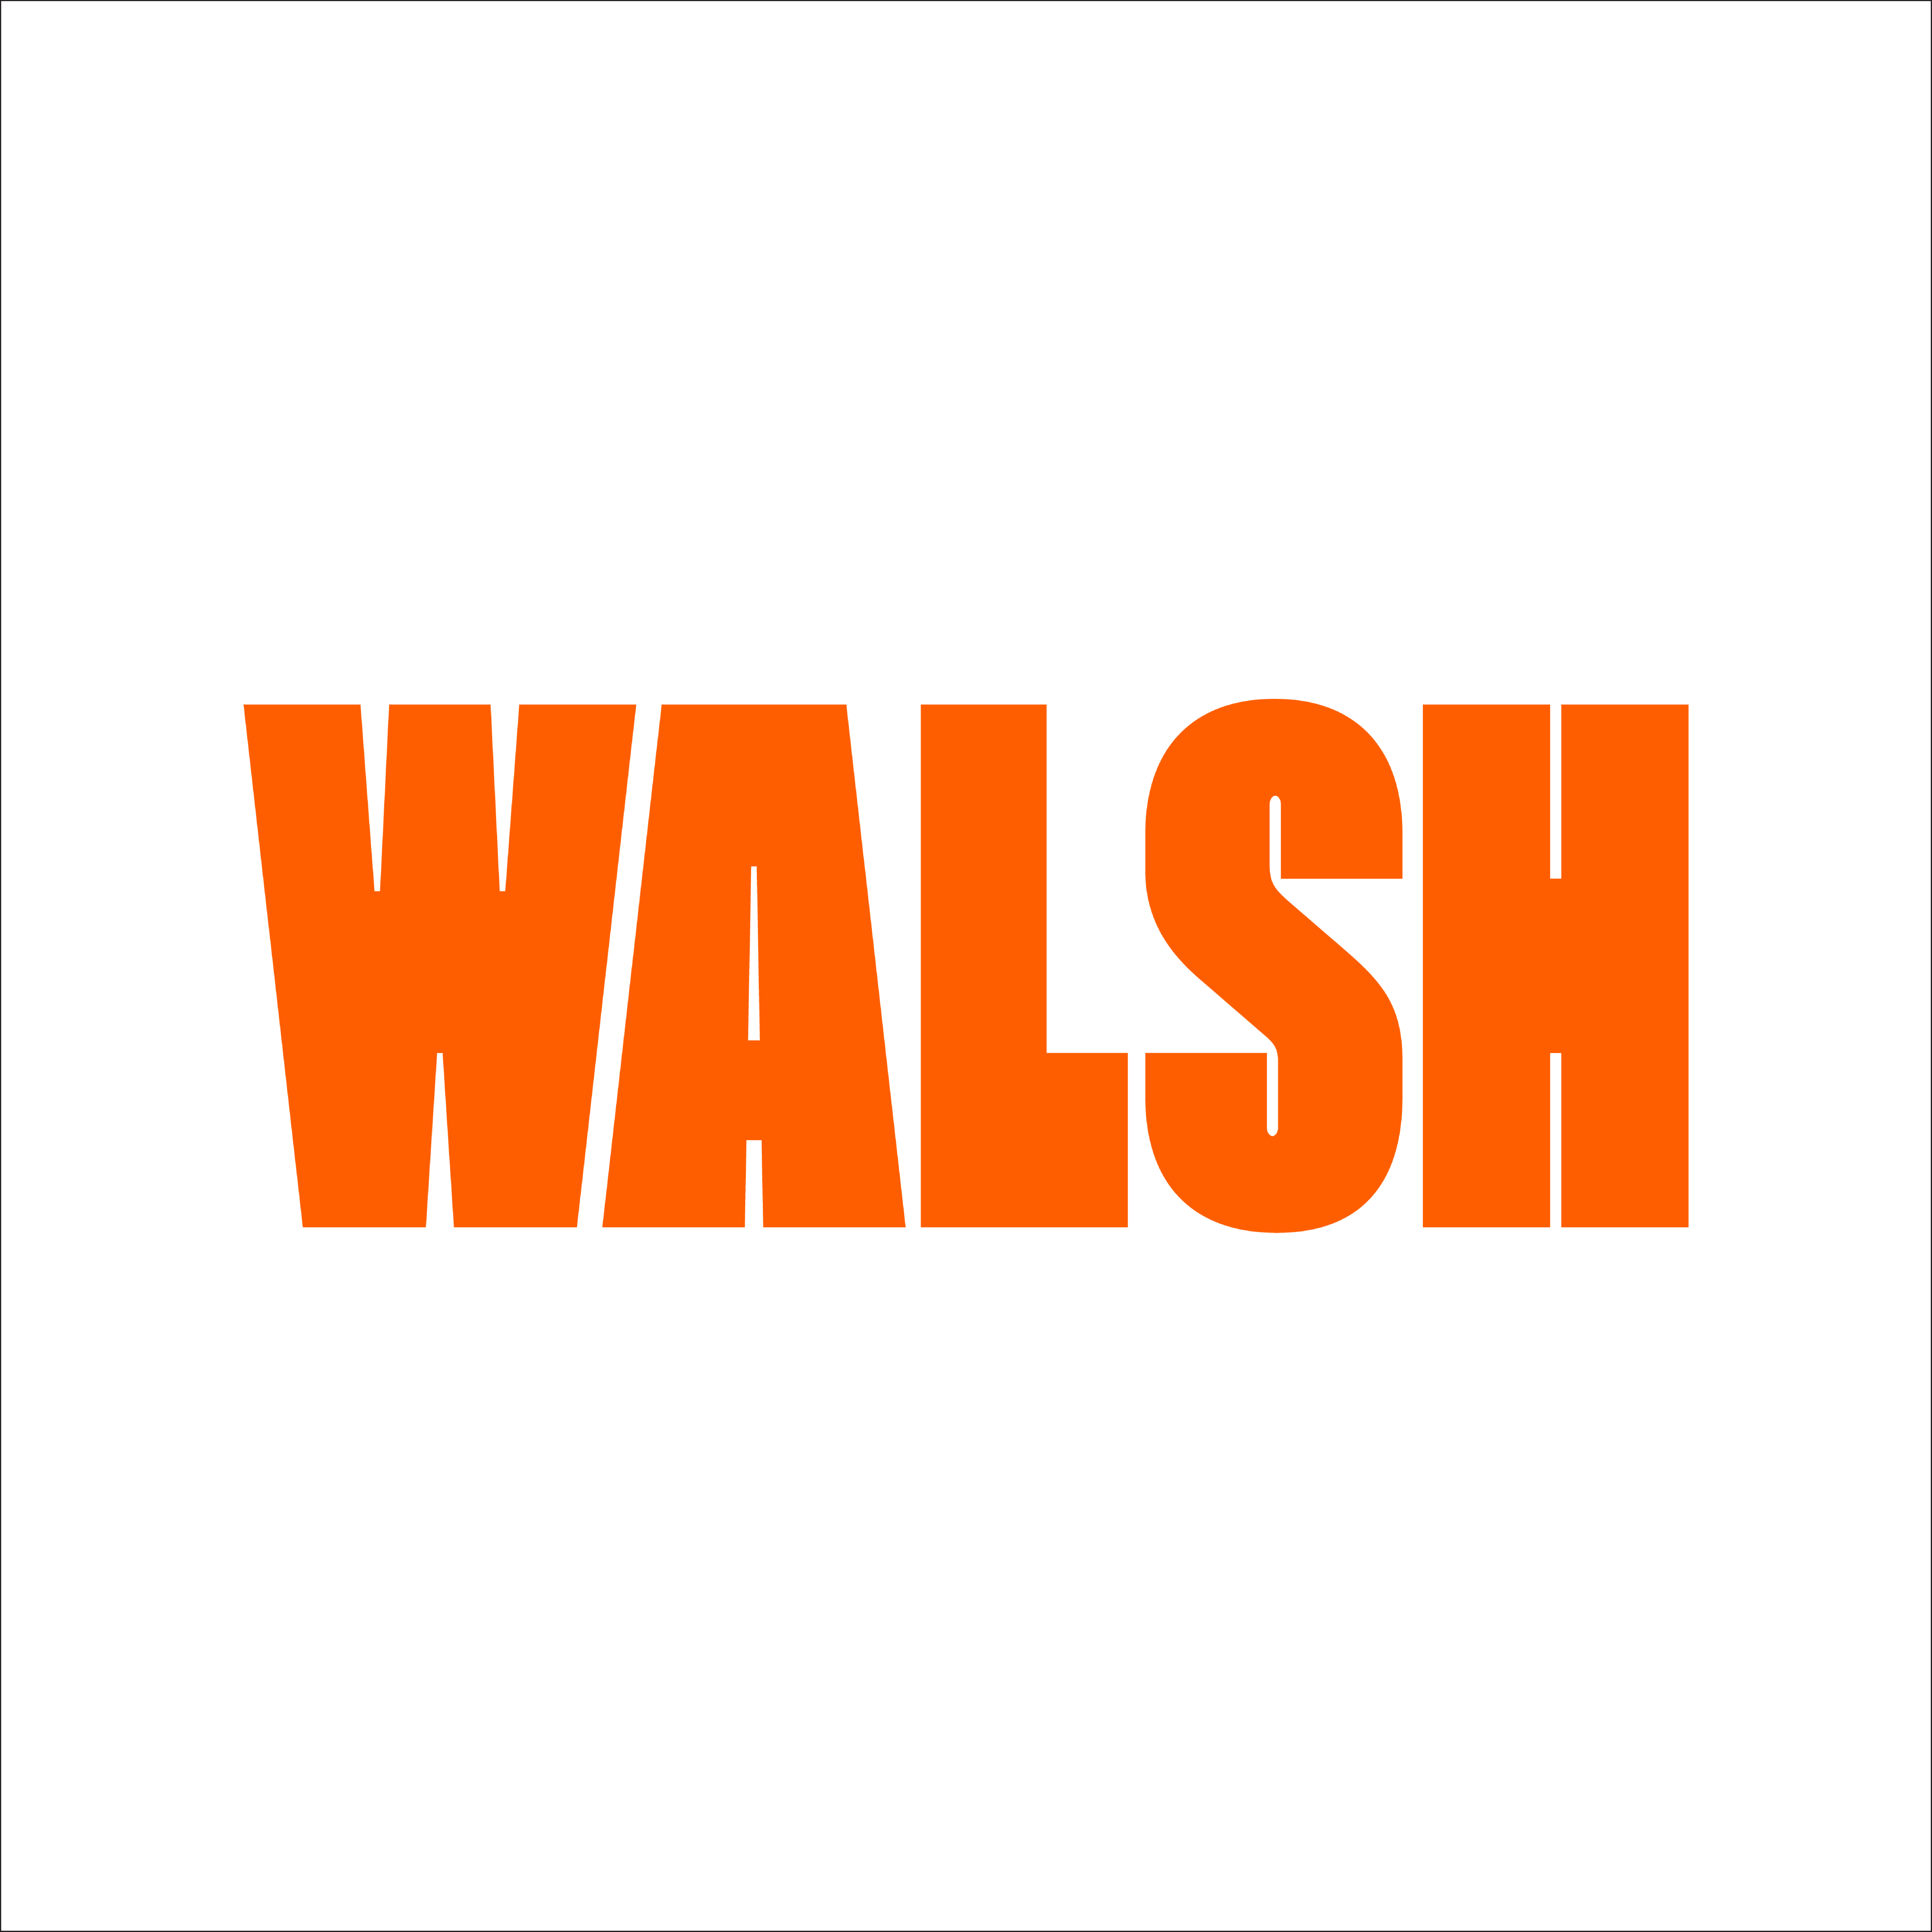 Walsh Gates Wordmark logo design by logo designer DSR Branding for your inspiration and for the worlds largest logo competition